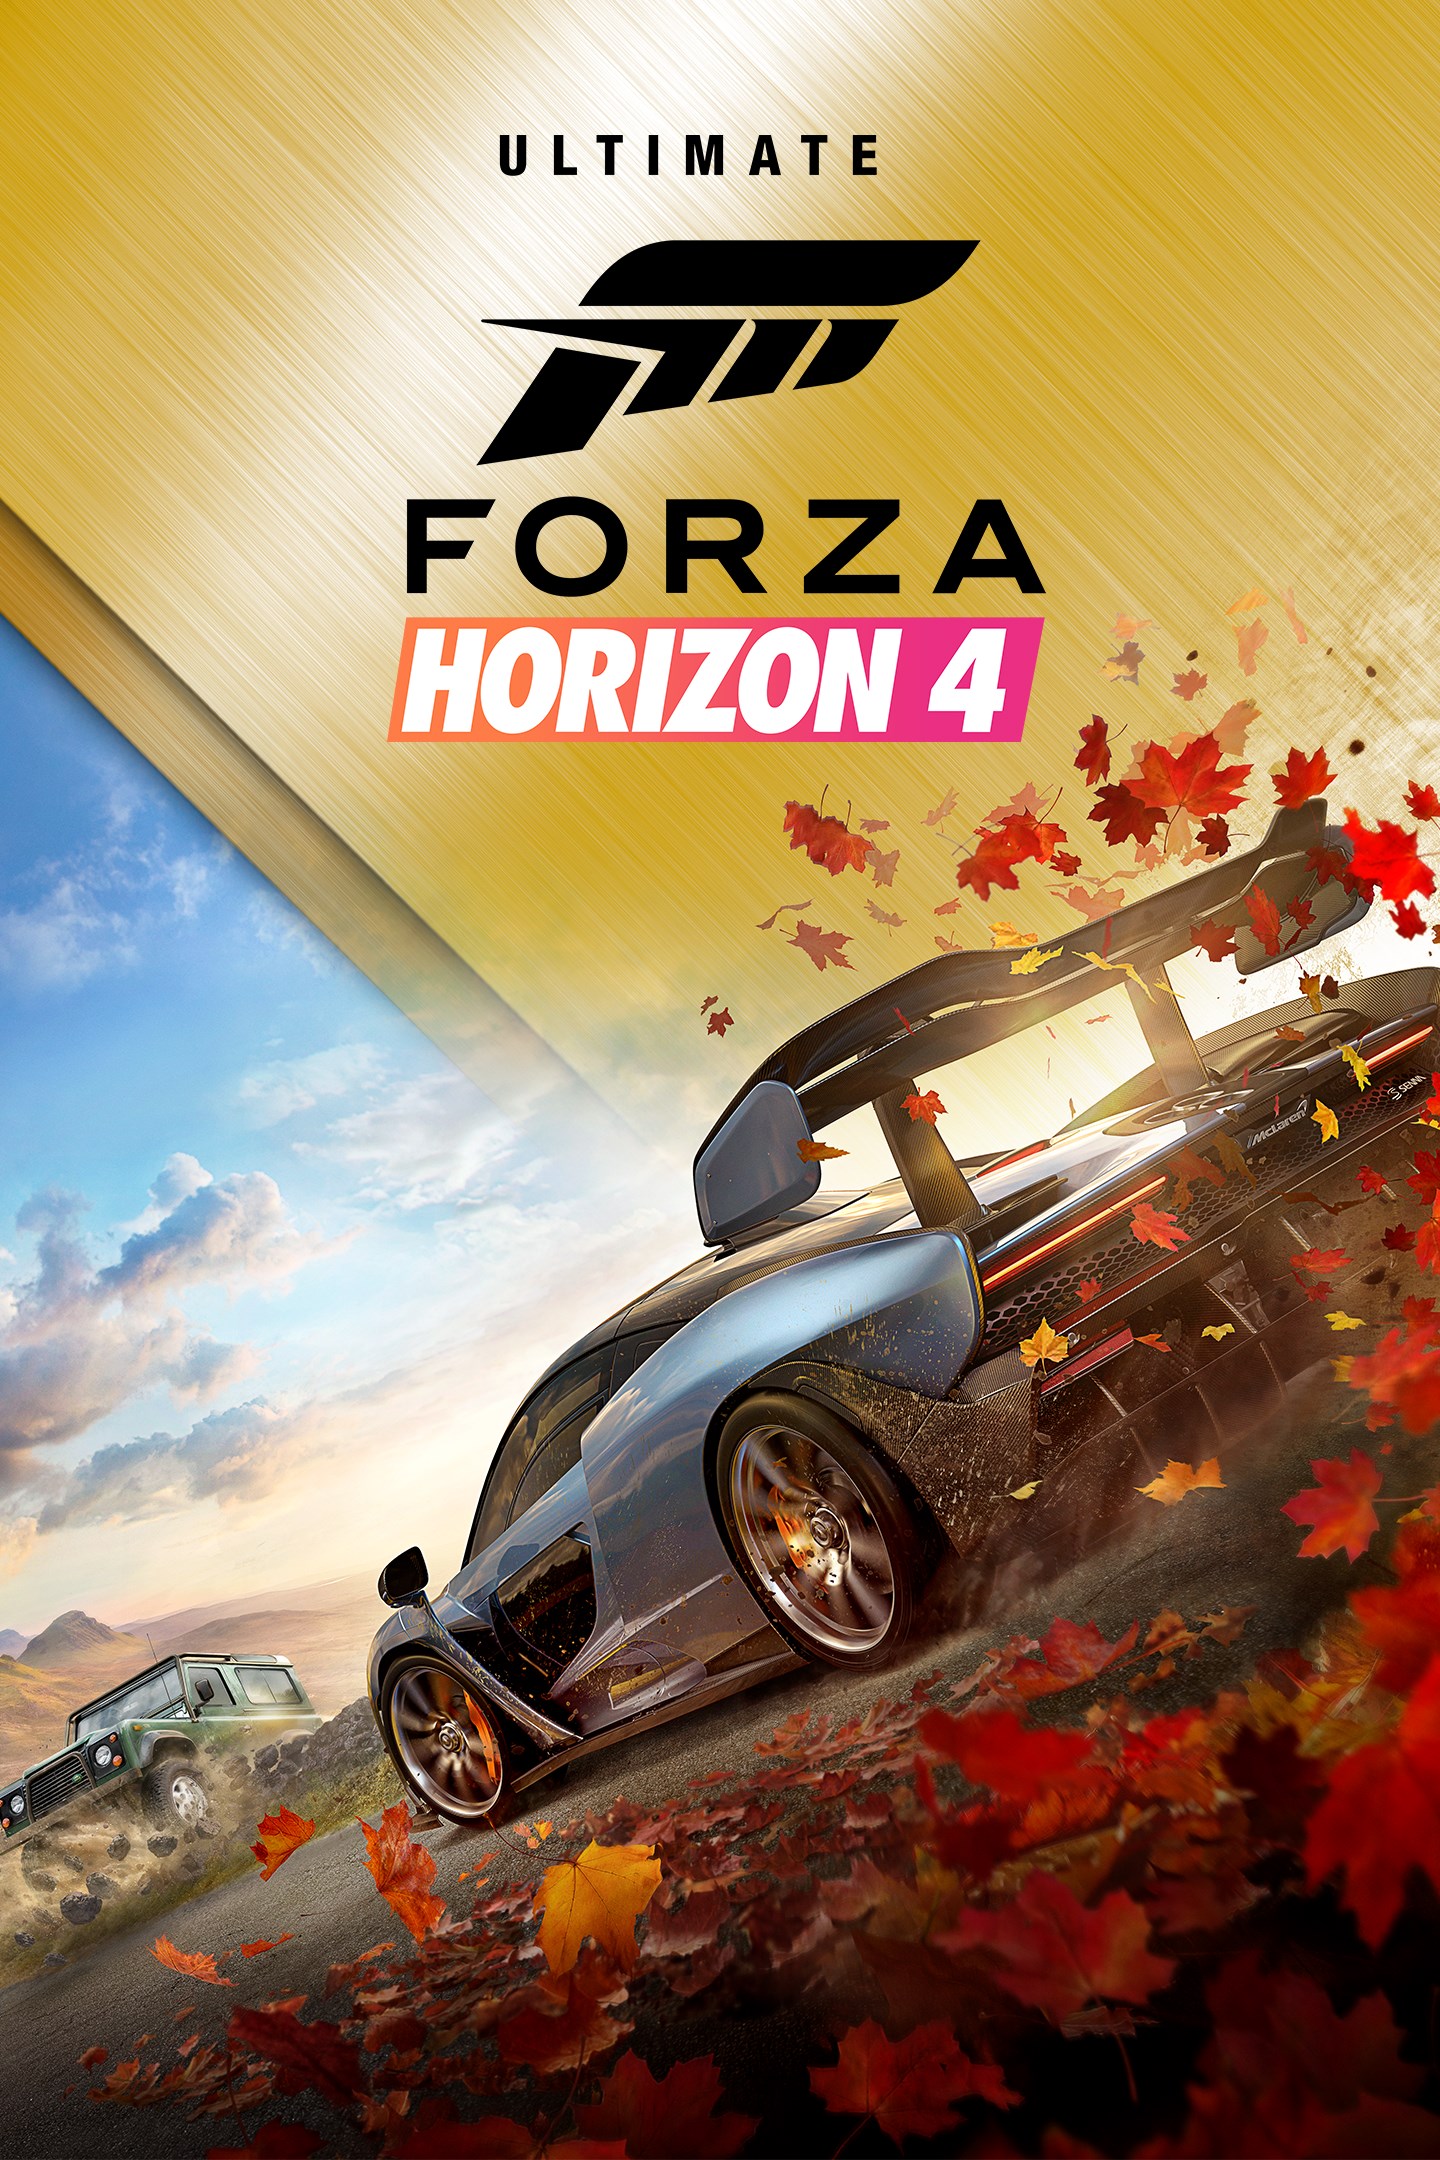 Deadlock Necessities Uluru Buy Forza Horizon 4 Ultimate Edition - Microsoft Store en-LR